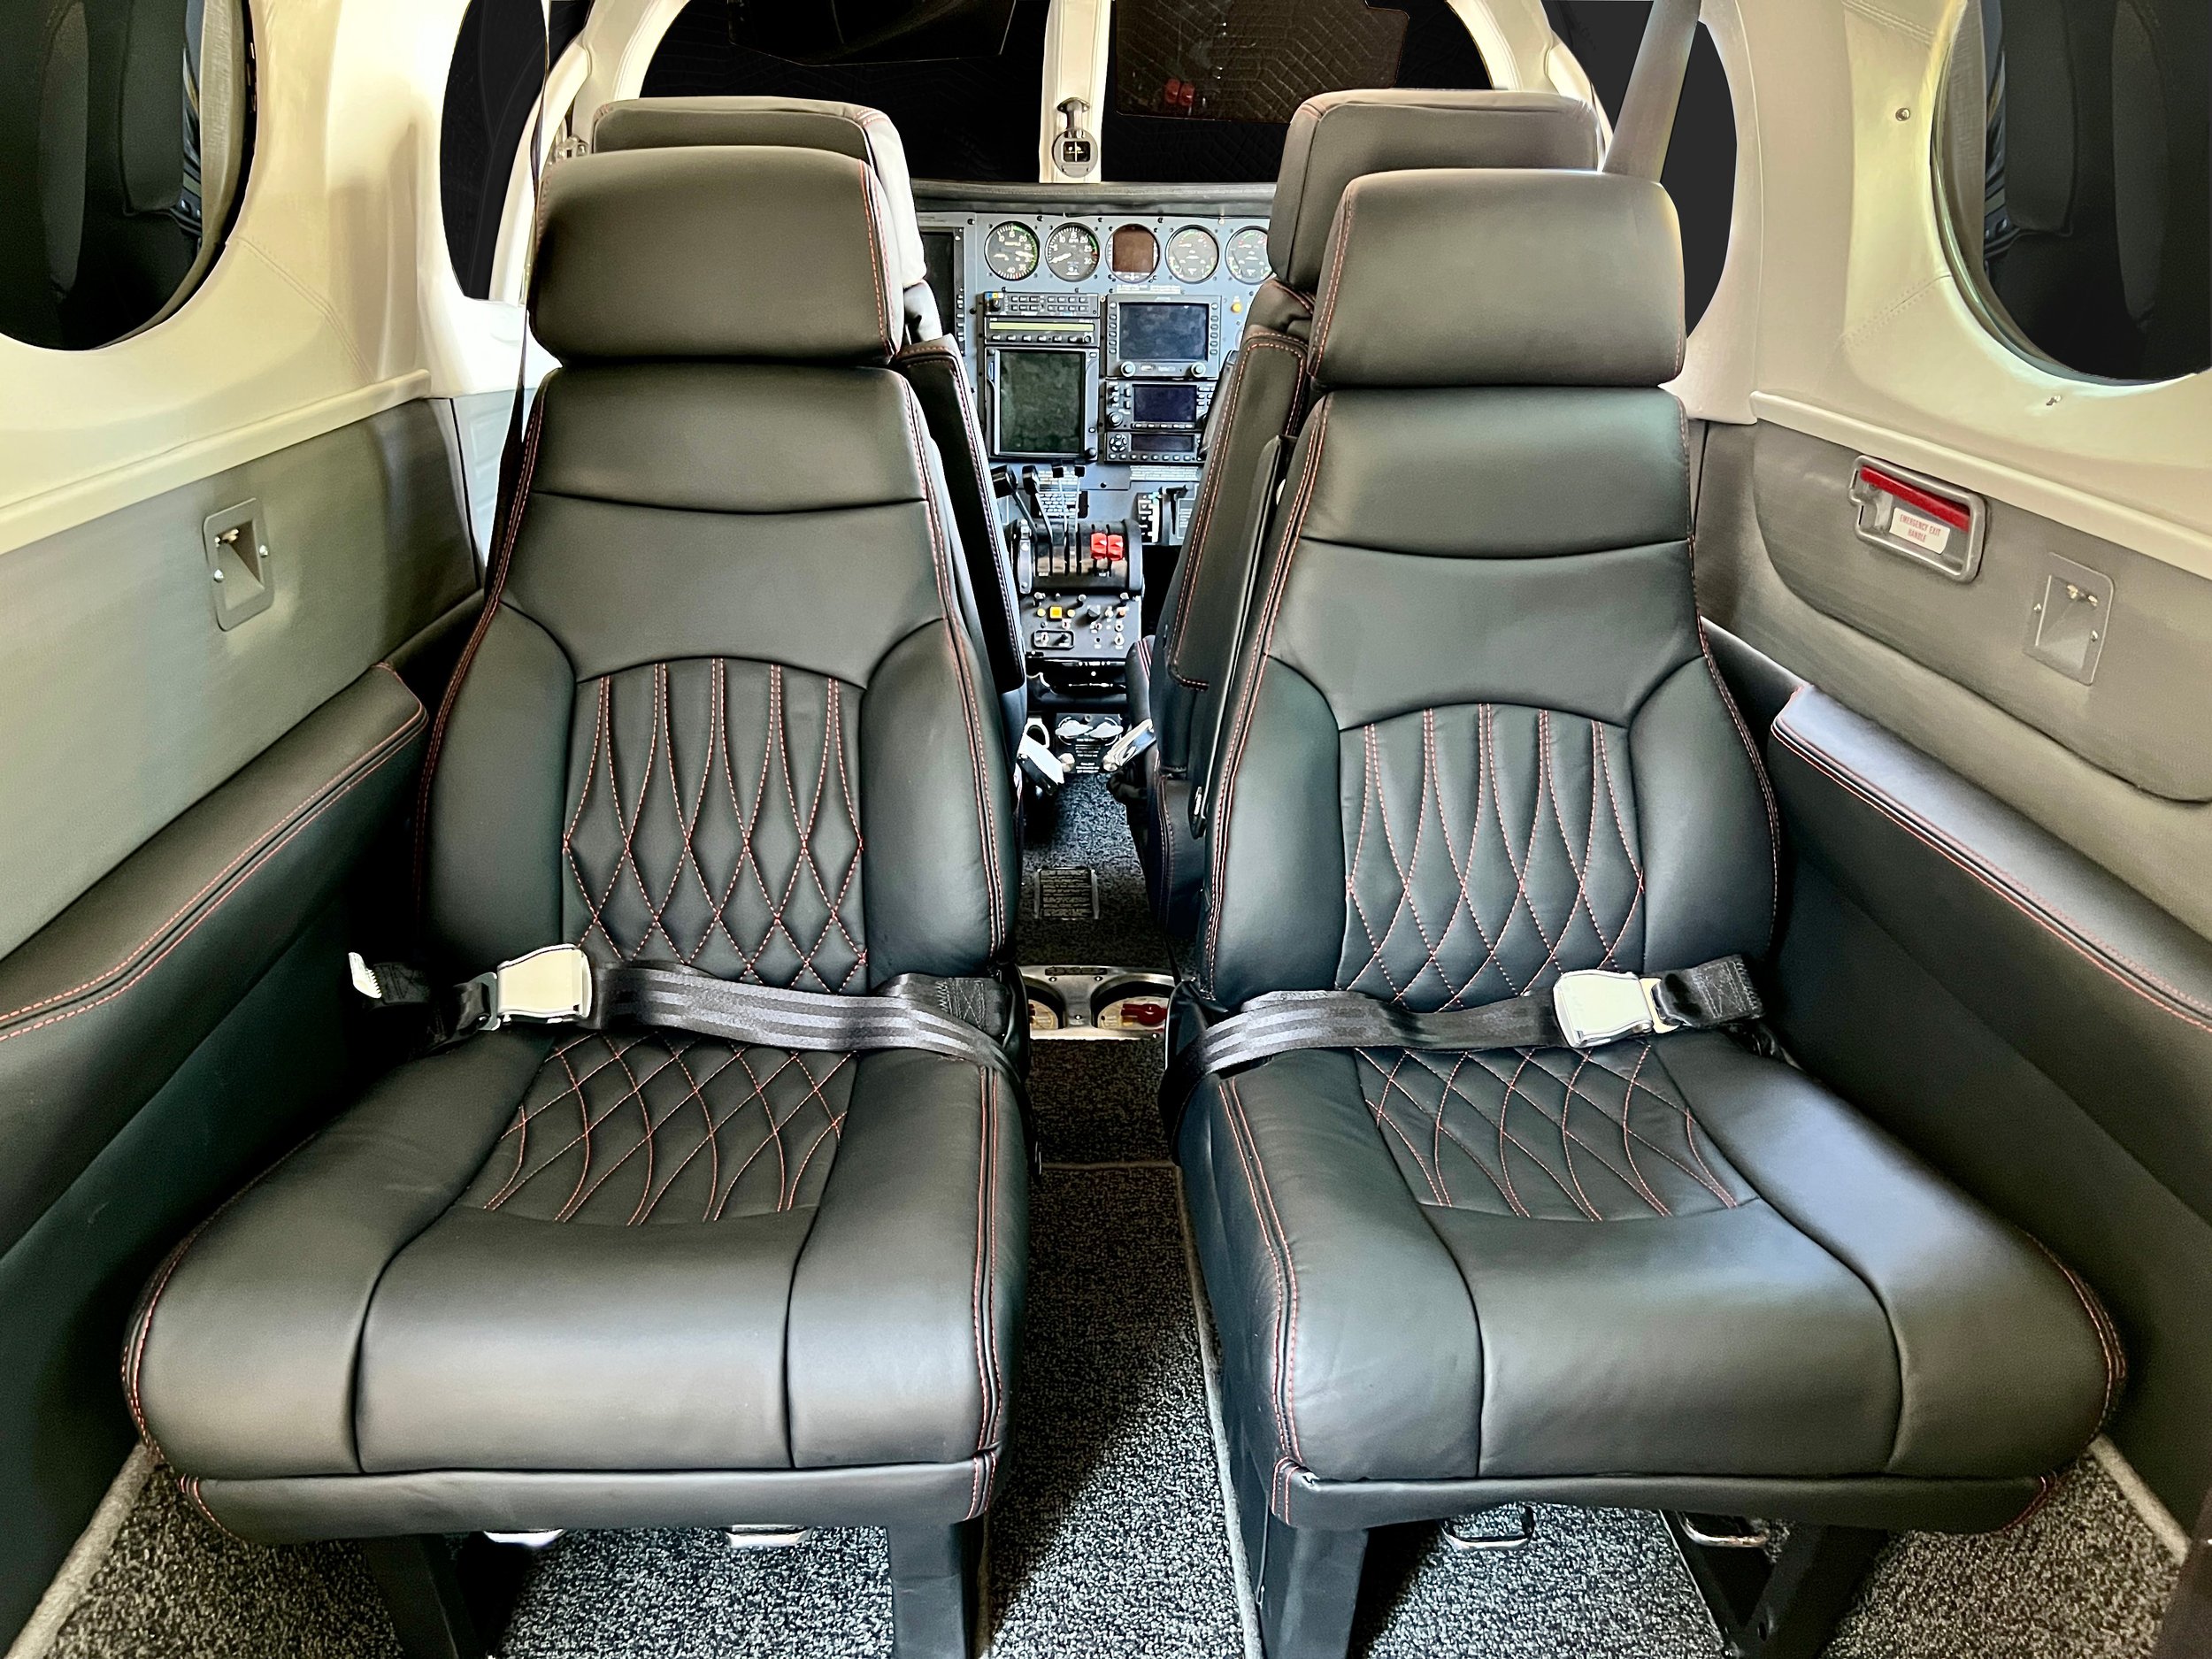 Cessna 340 interior pic 2.jpg